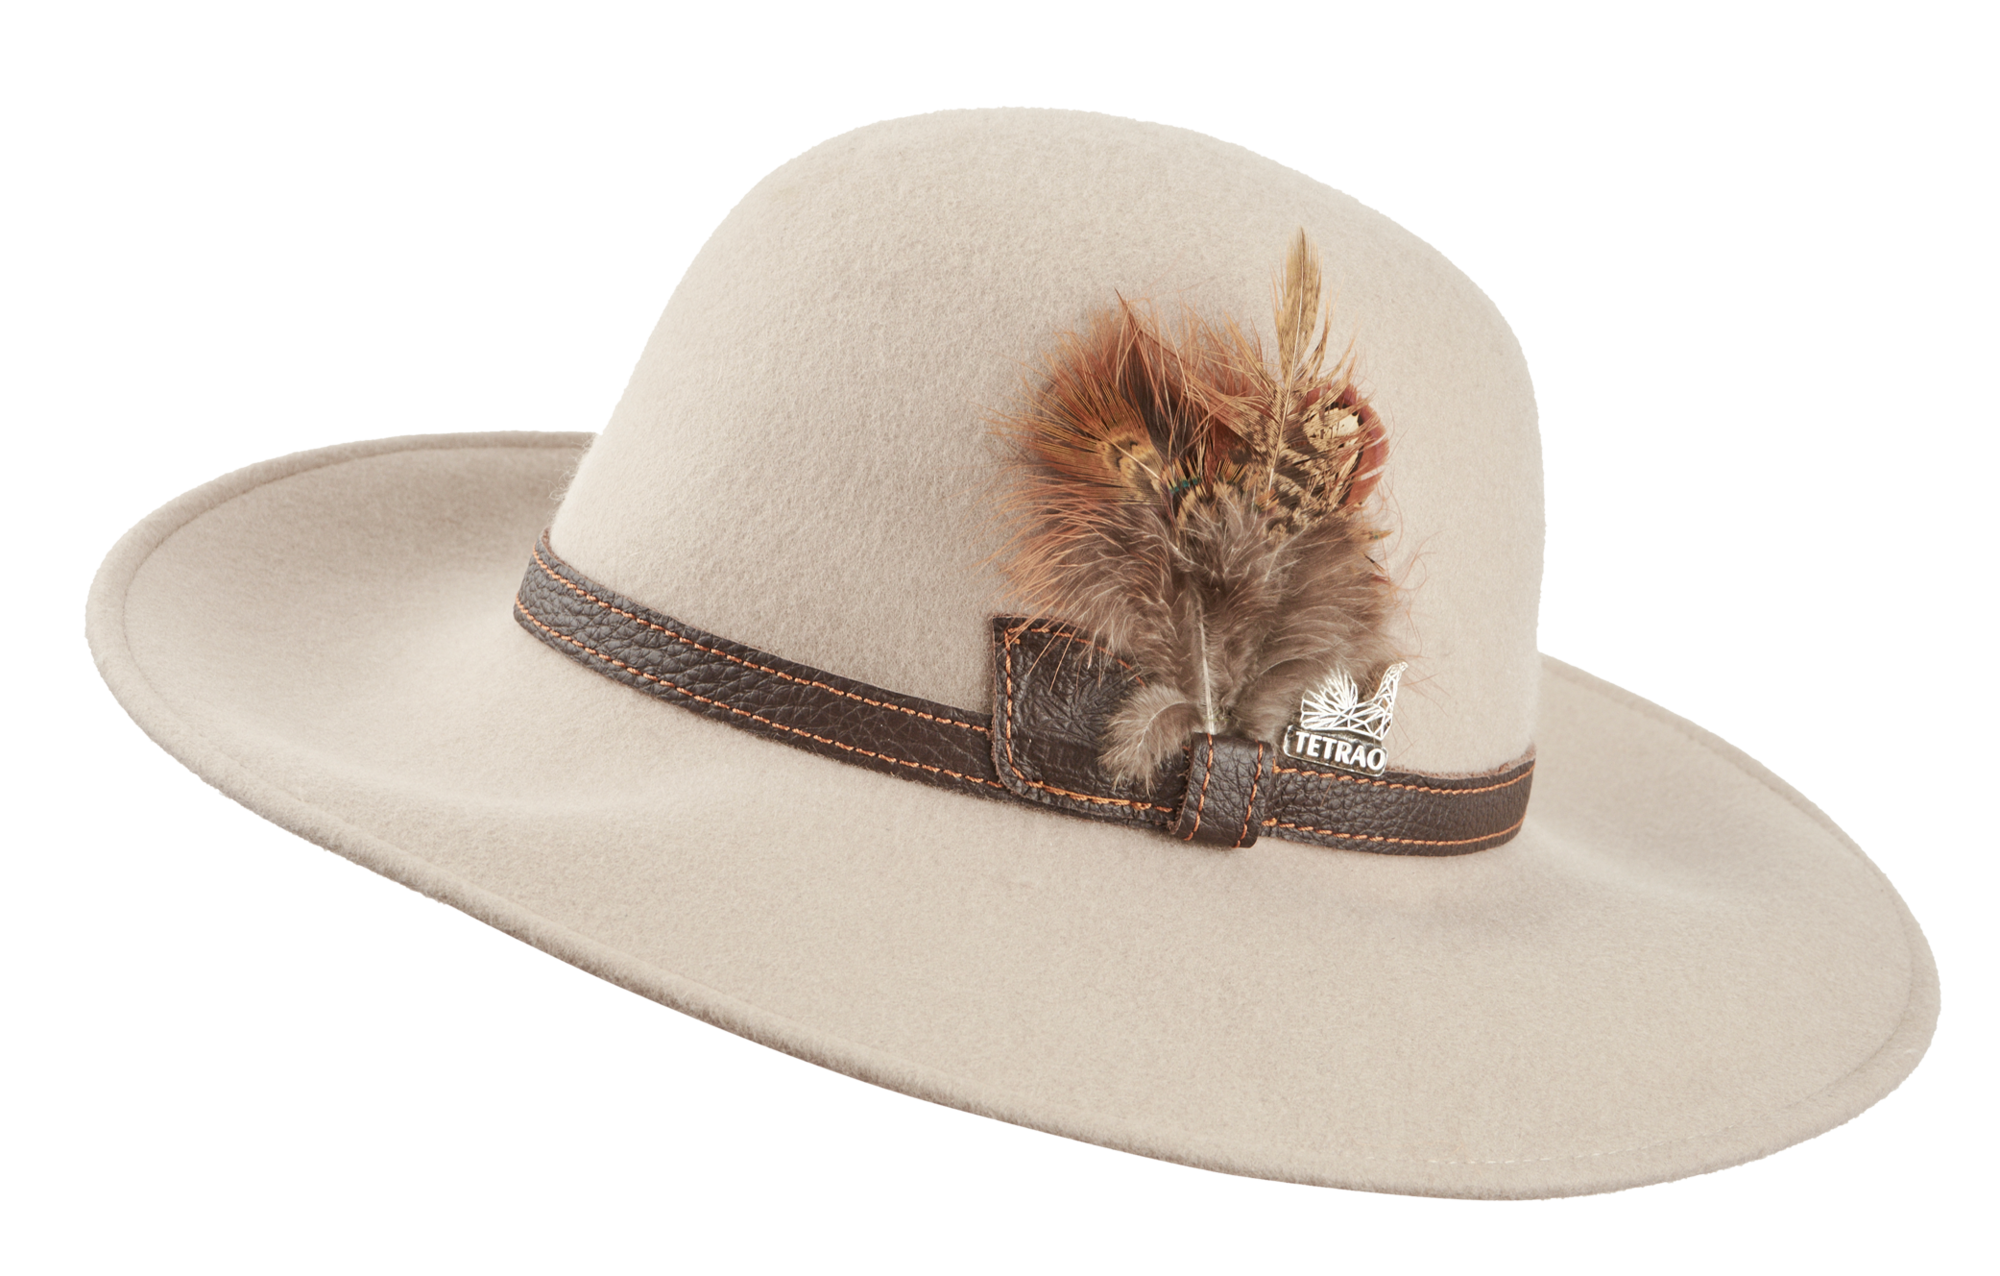 Dámsky poľovnícky klobúk TETRAO - béžový 56  